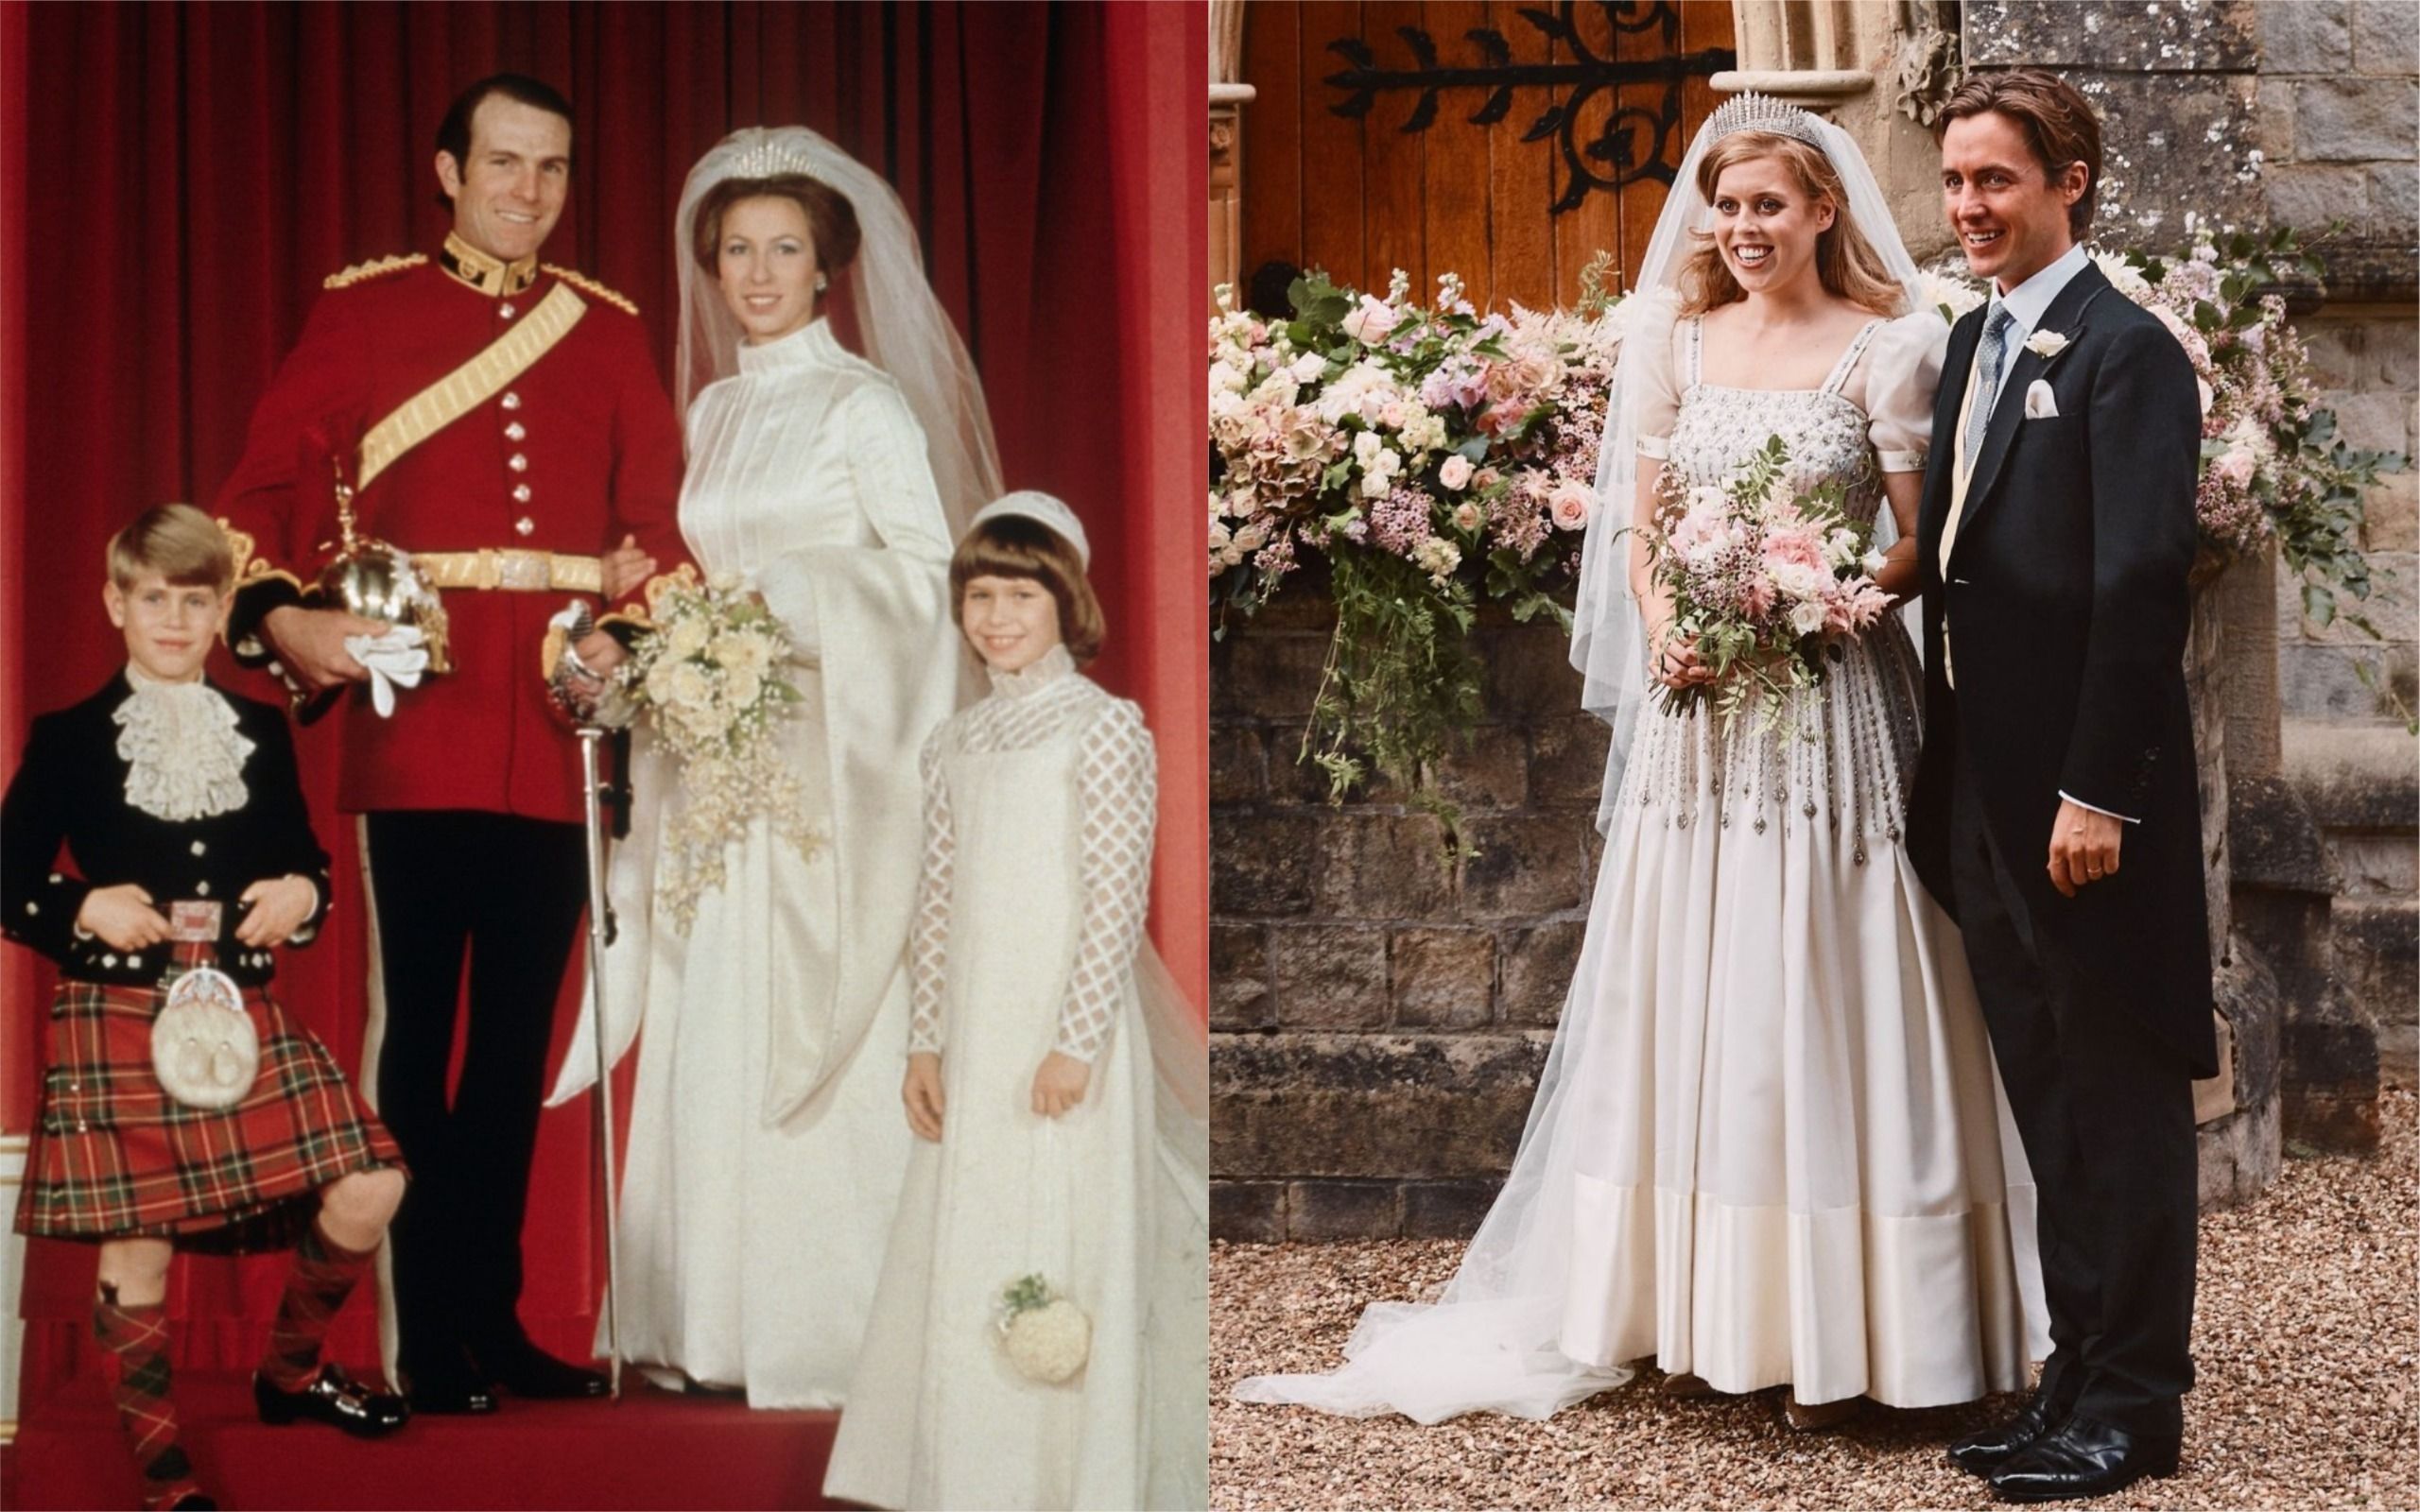 Queen Elizabeth II's Favorite, 6 Interesting Facts About Queen Mary's Tiara Fringe